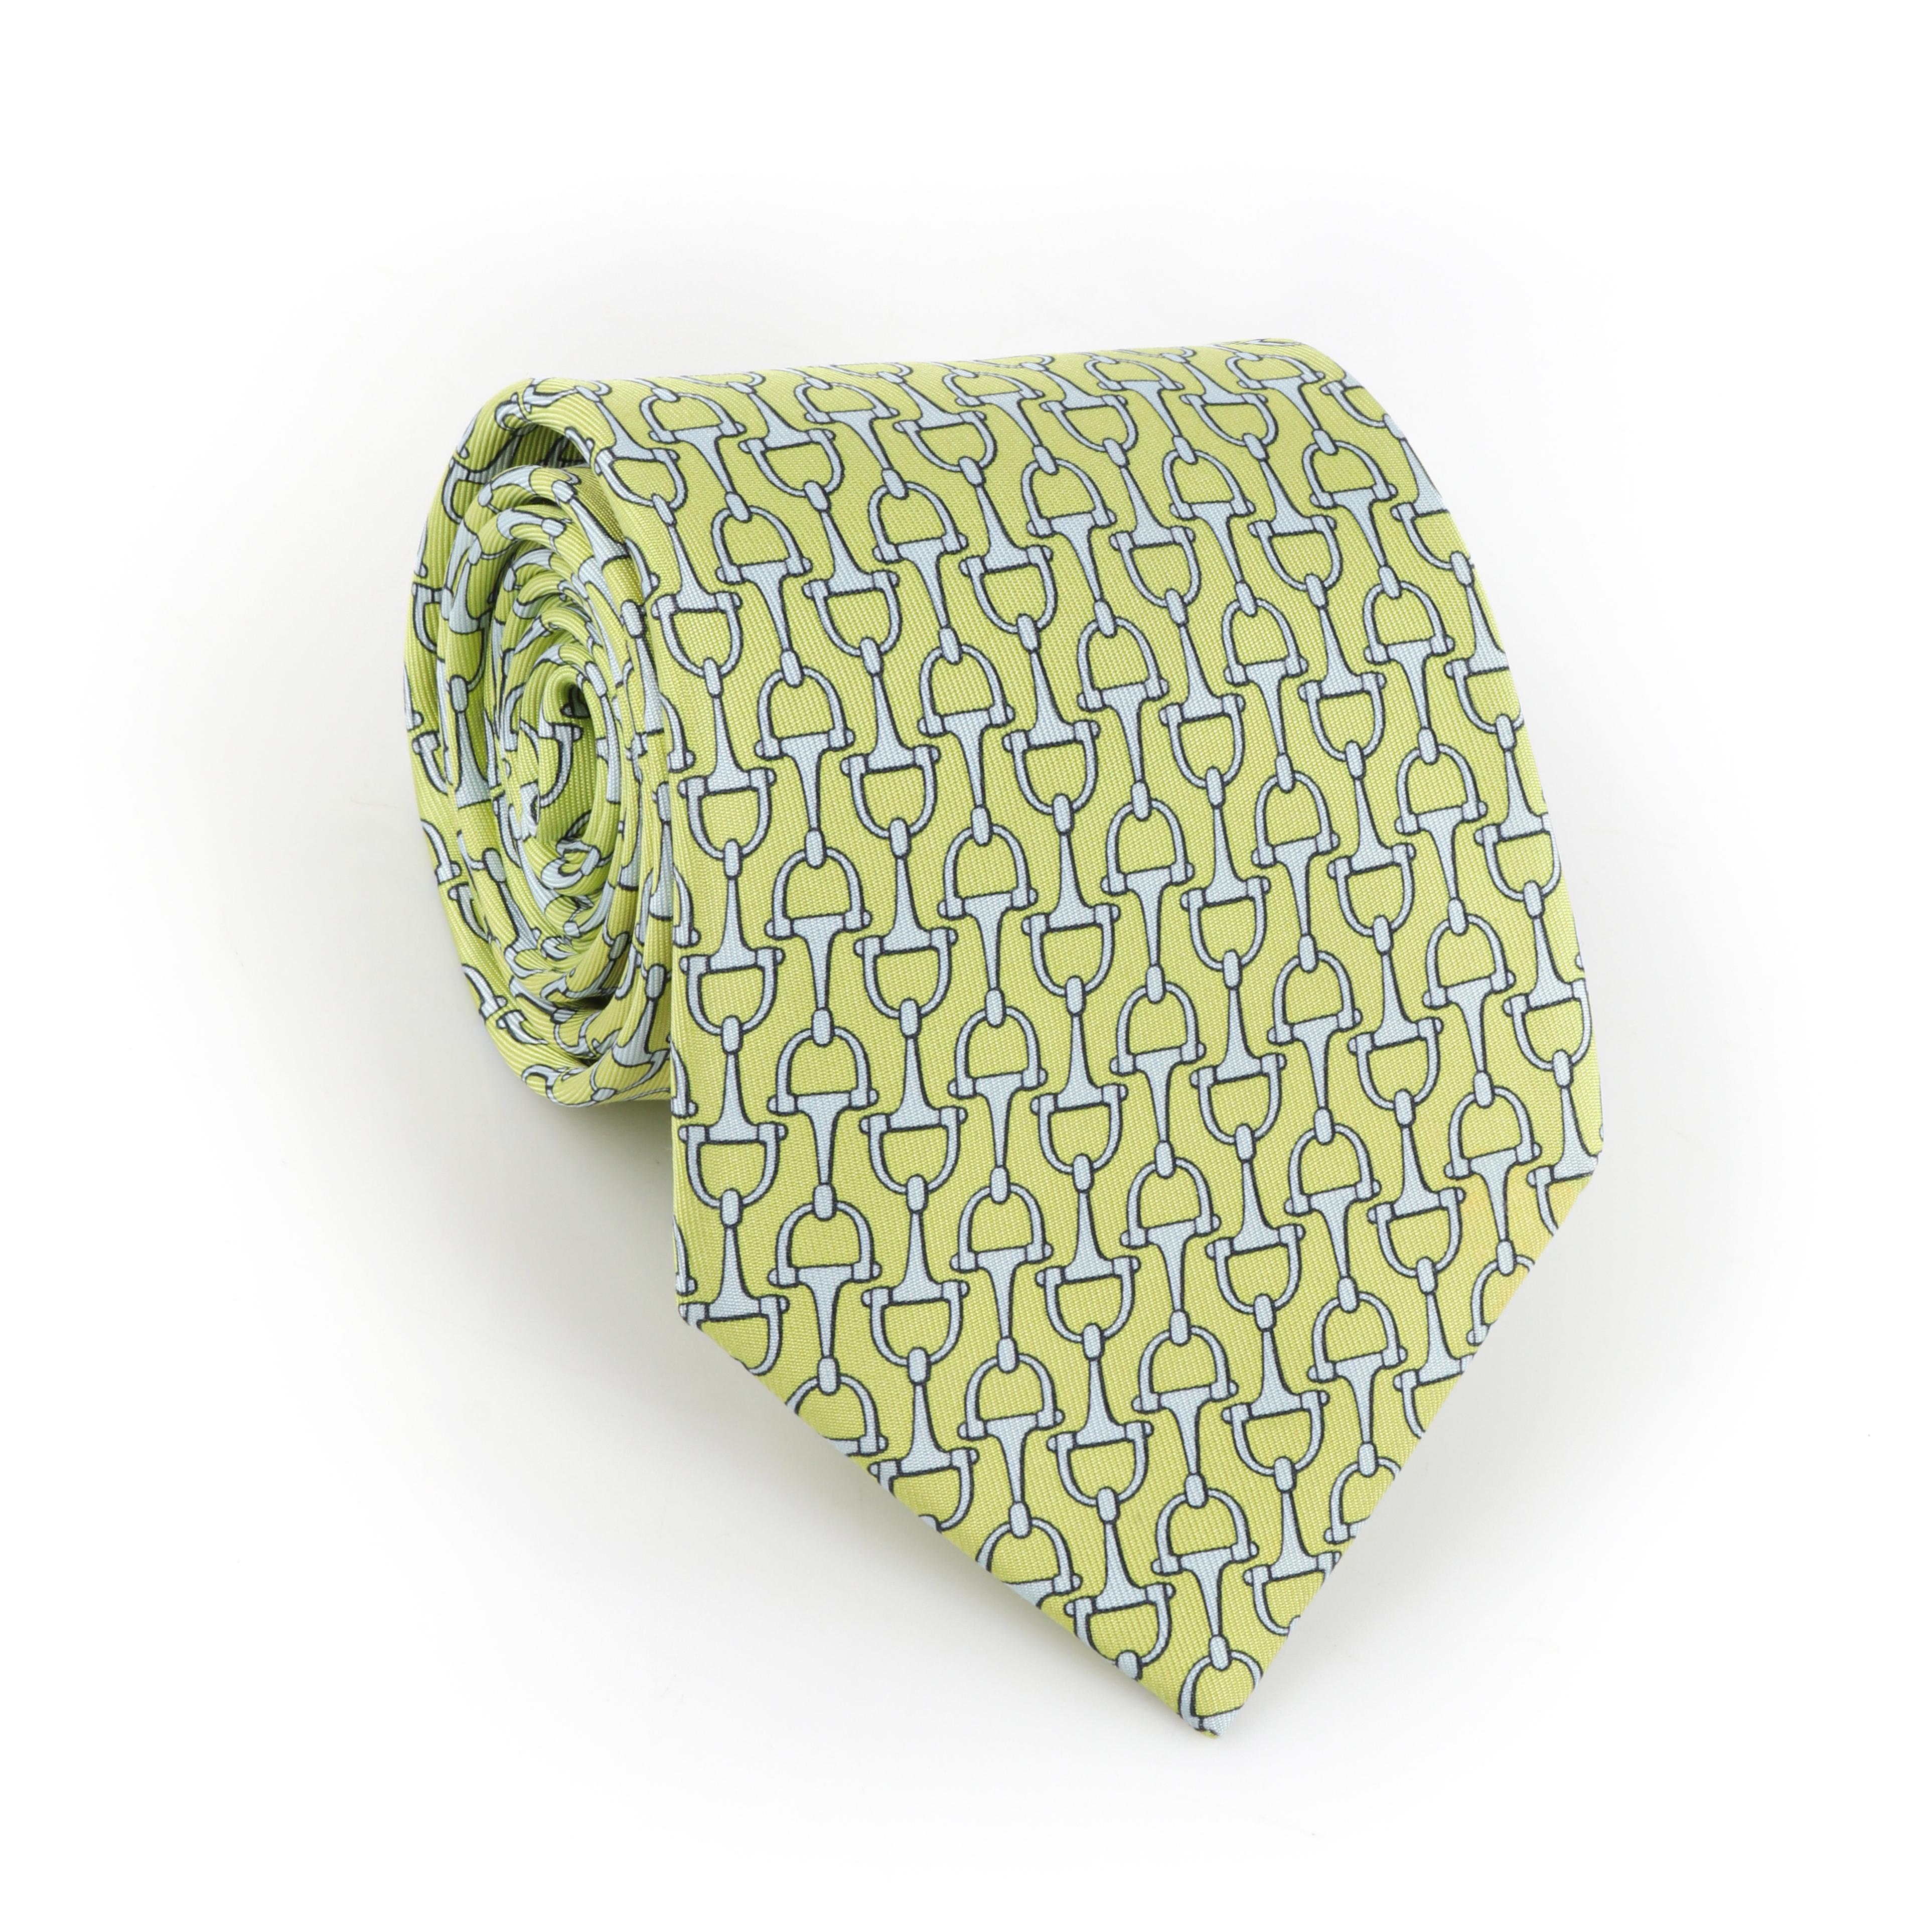 HERMES Mens Chartreuse Green Light Blue Horstbit 5-Fold Silk Necktie Tie 5214 IA
 
Brand/Manufacturer: Hermes
Style: 5-Fold necktie
Color(s): Chartreuse green, light blue, black
Lined: Yes
Marked Fabric Content: “100% Silk”
Additional Details /